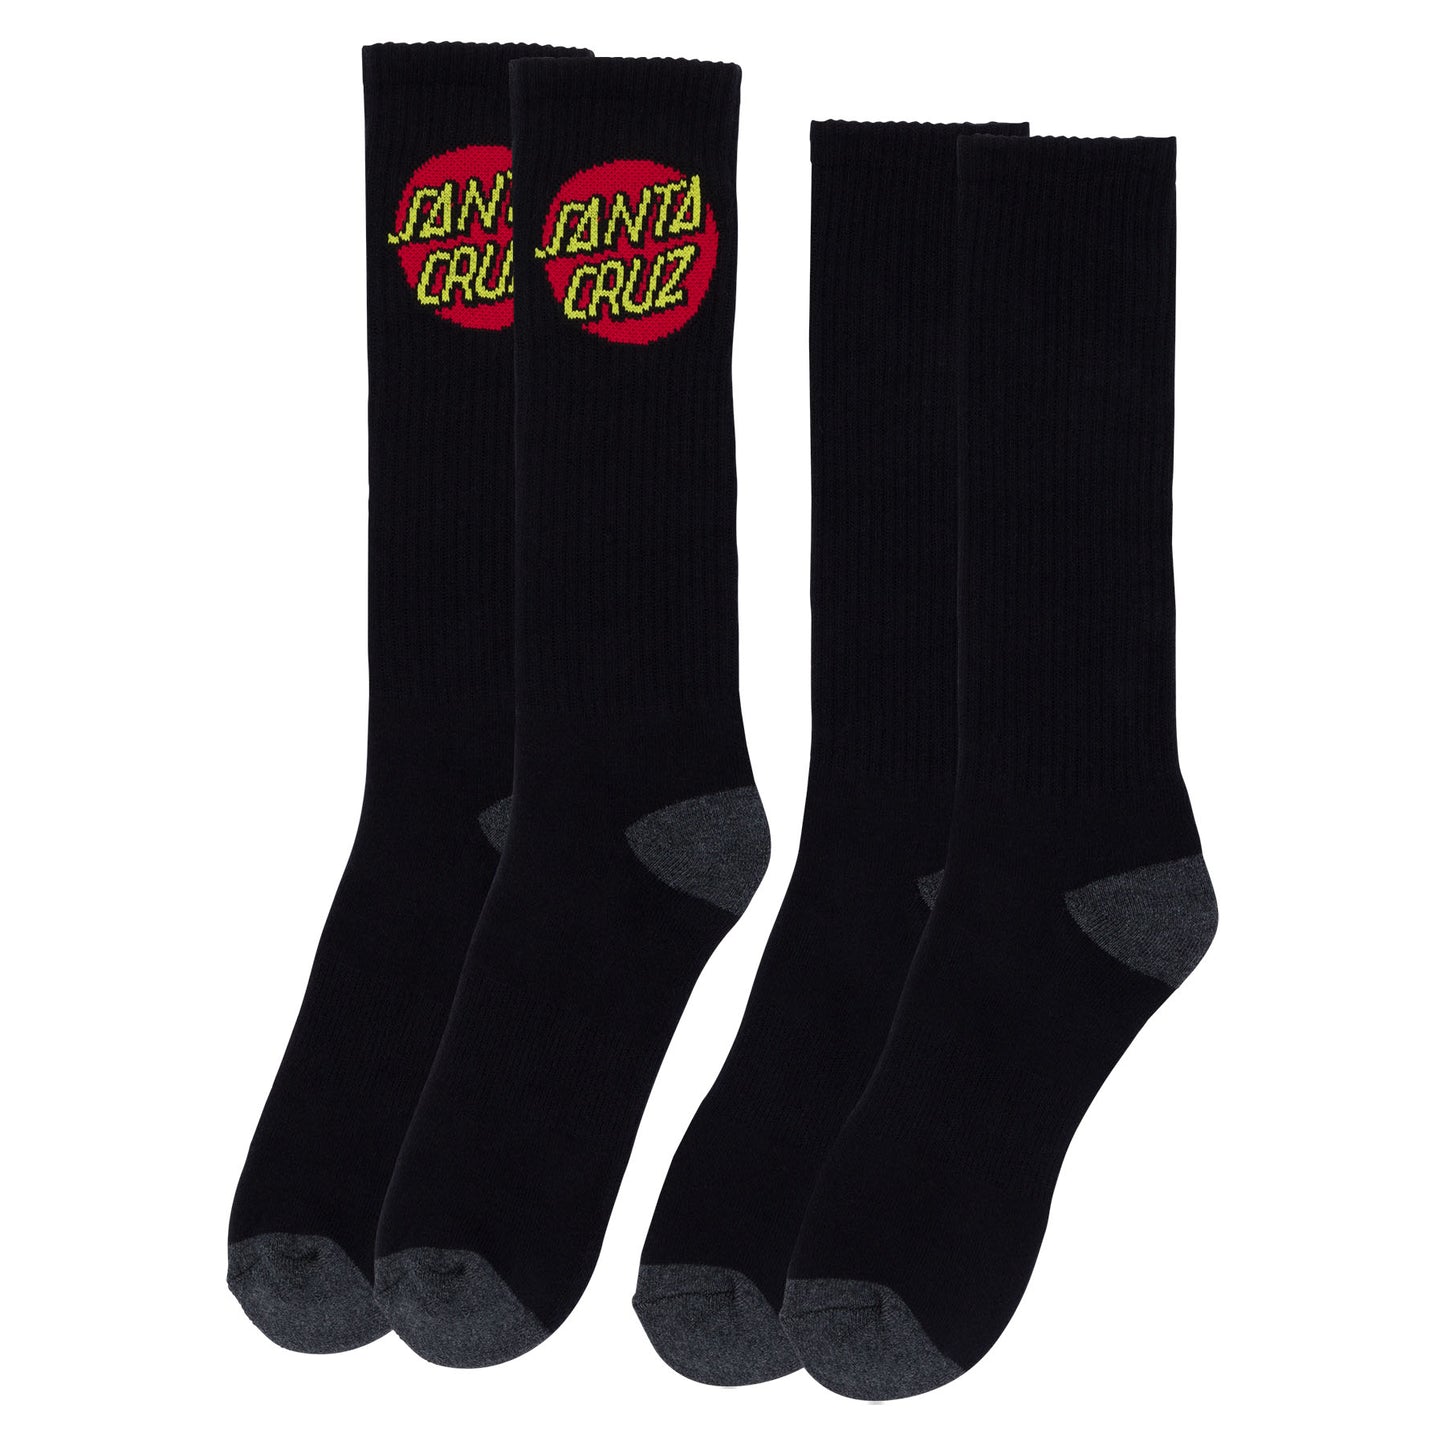 Cruz Socks